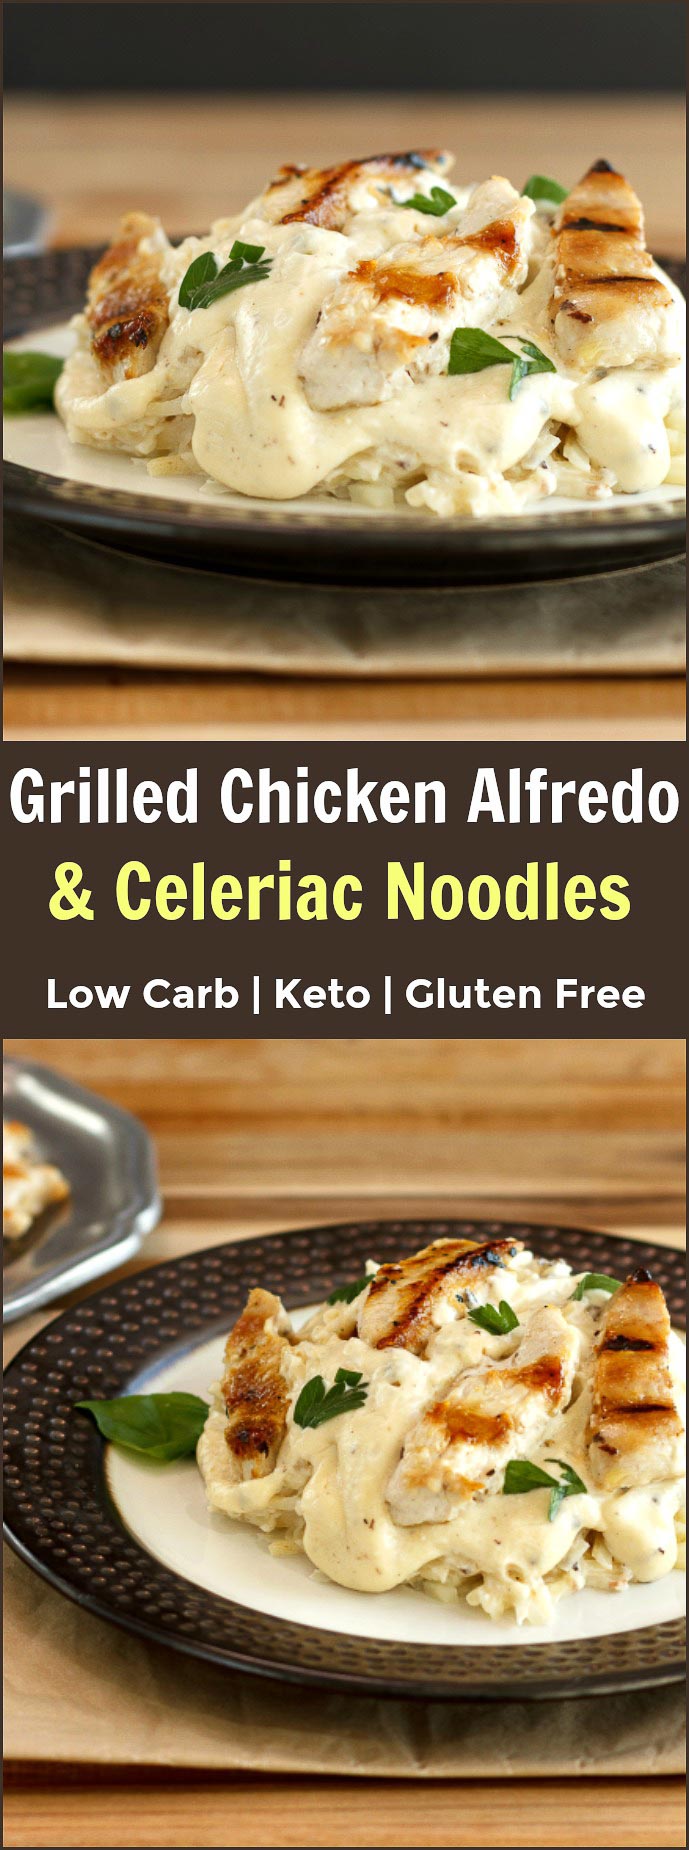 Grilled Chicken Alfredo Celeriac Noodles Low Carb & Gluten Free